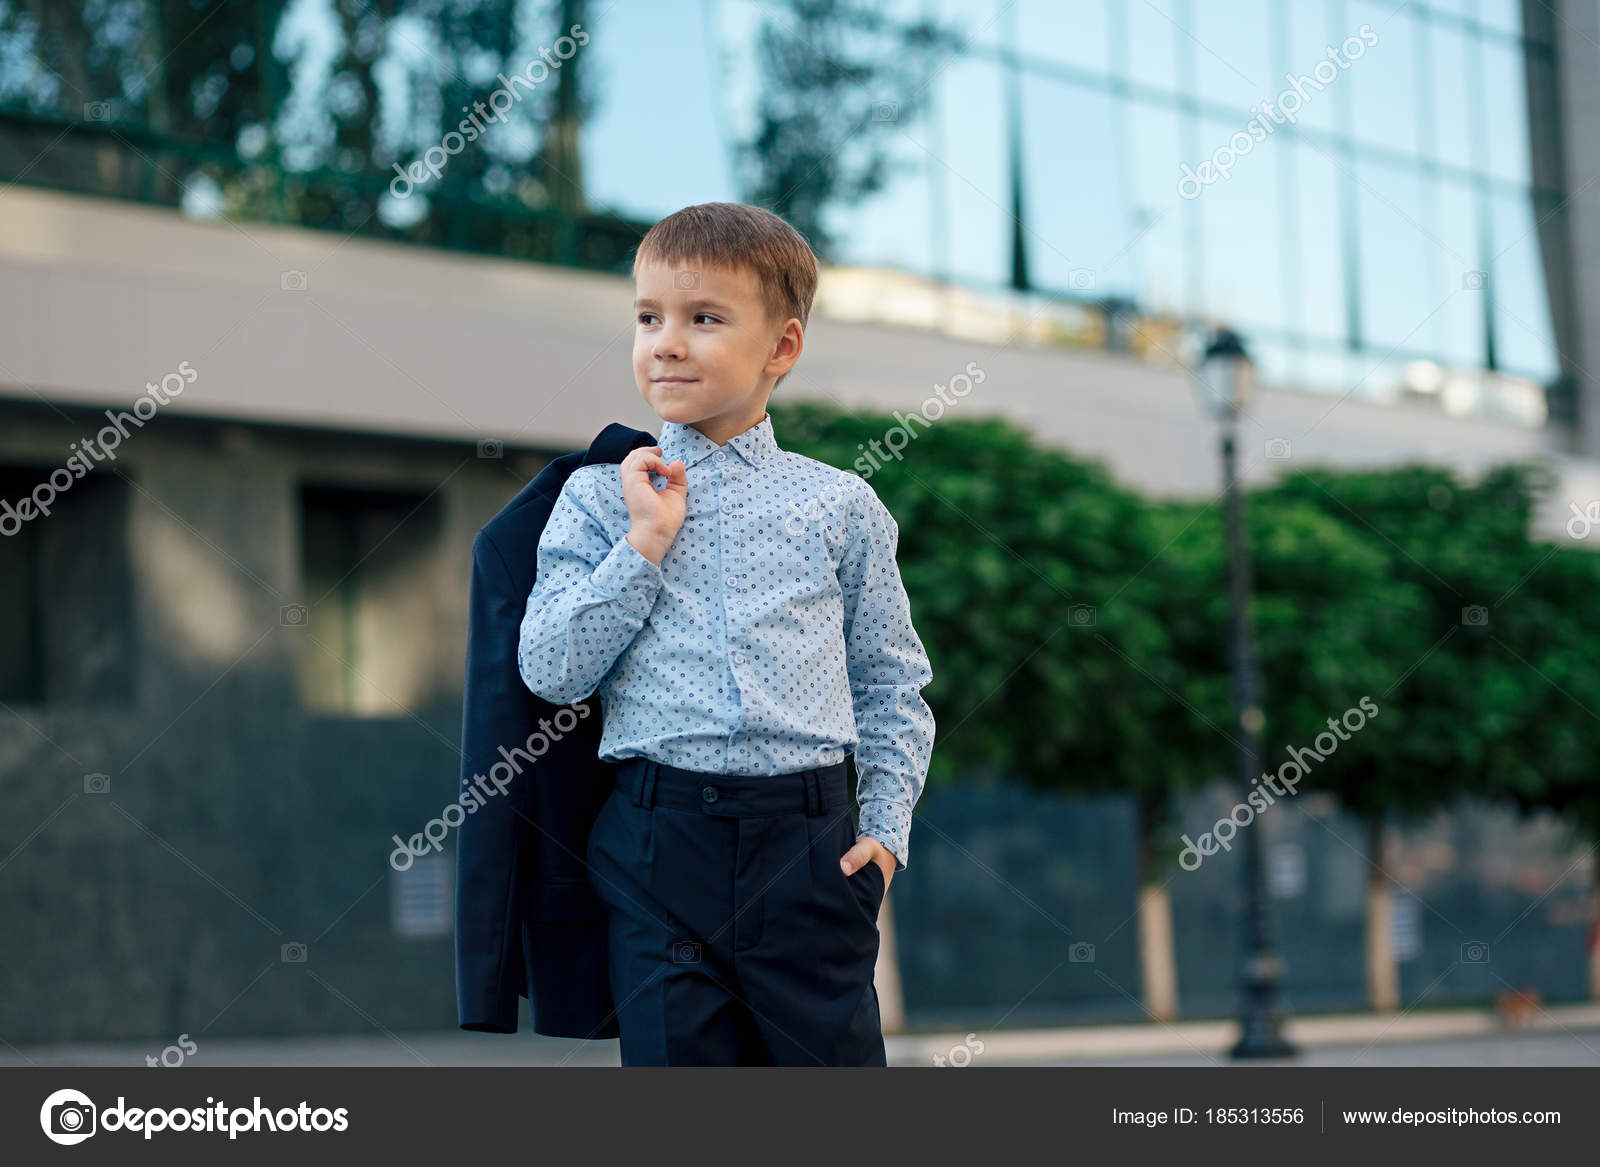 depositphotos 185313556 stock photo school boy posing in formal